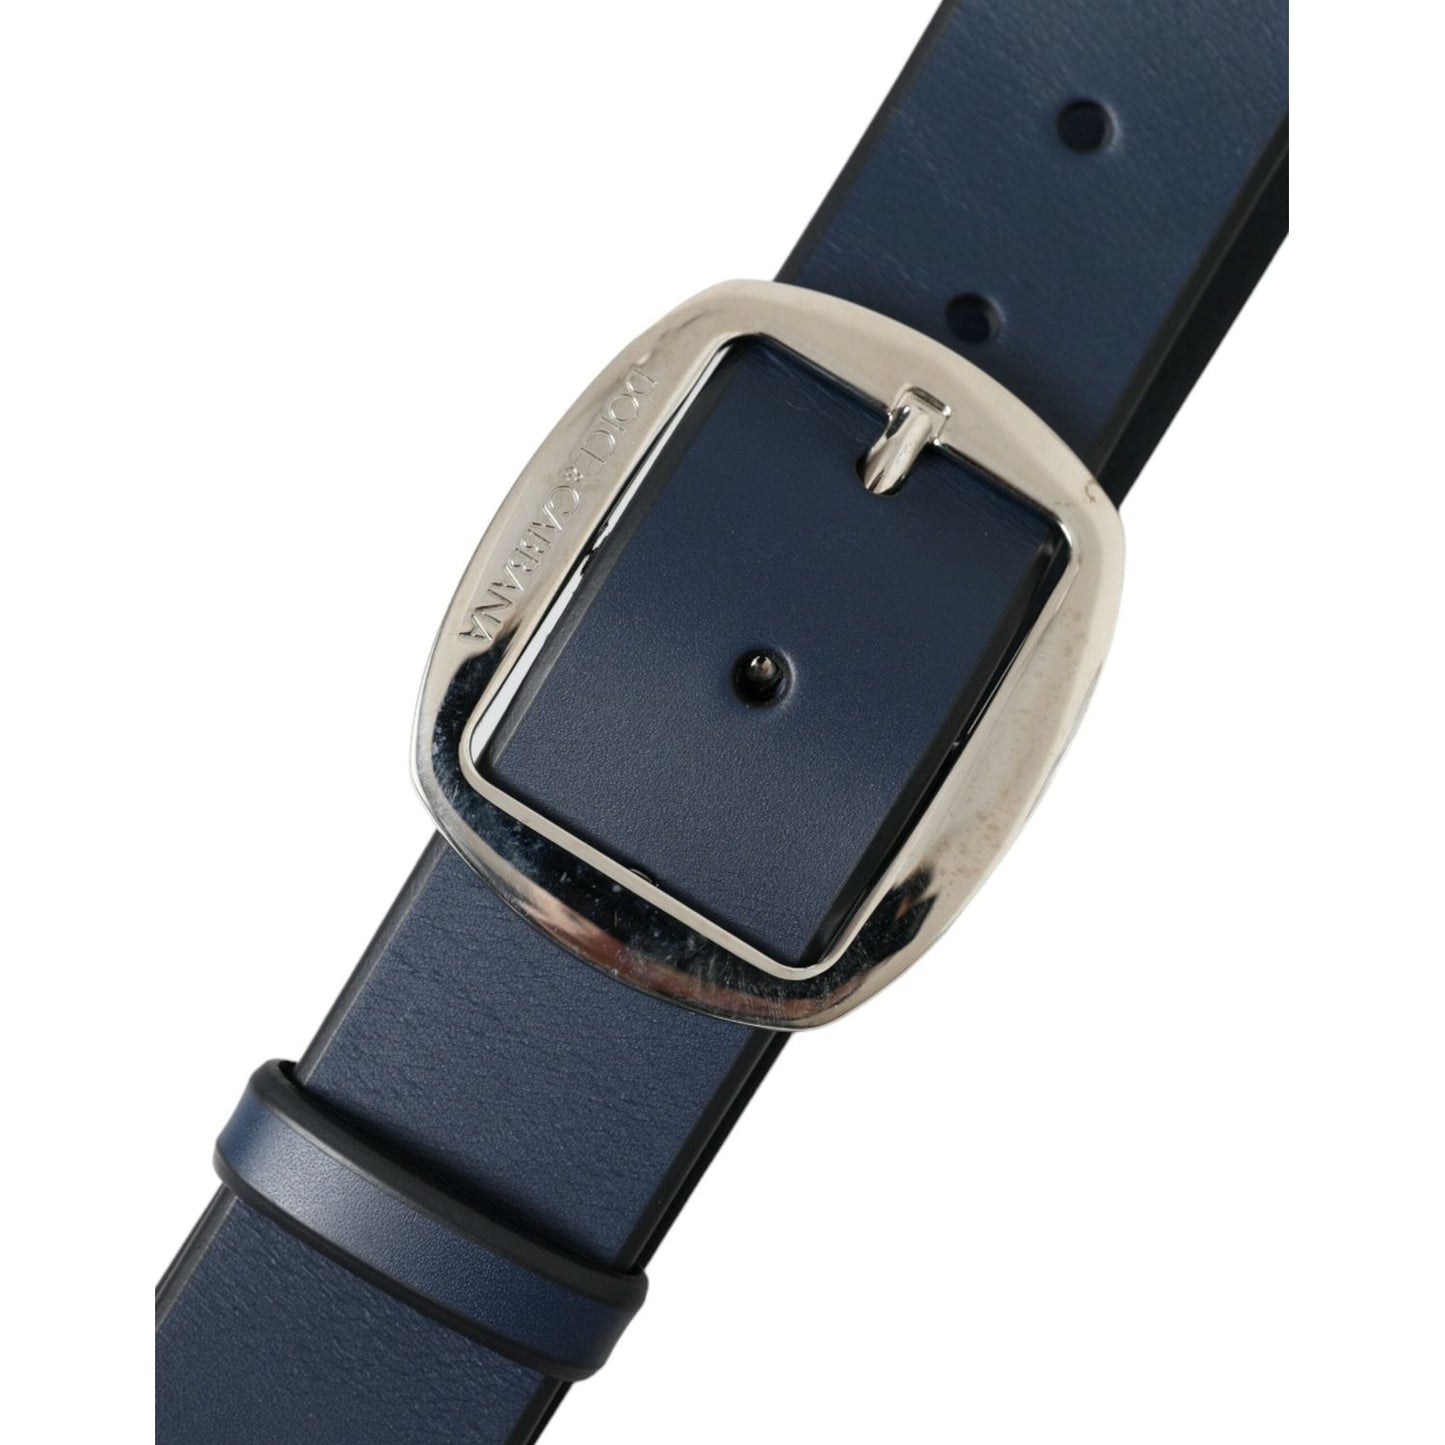 Dolce & Gabbana Elegant Blue Calf Leather Belt with Metal Buckle elegant-blue-calf-leather-belt-with-metal-buckle